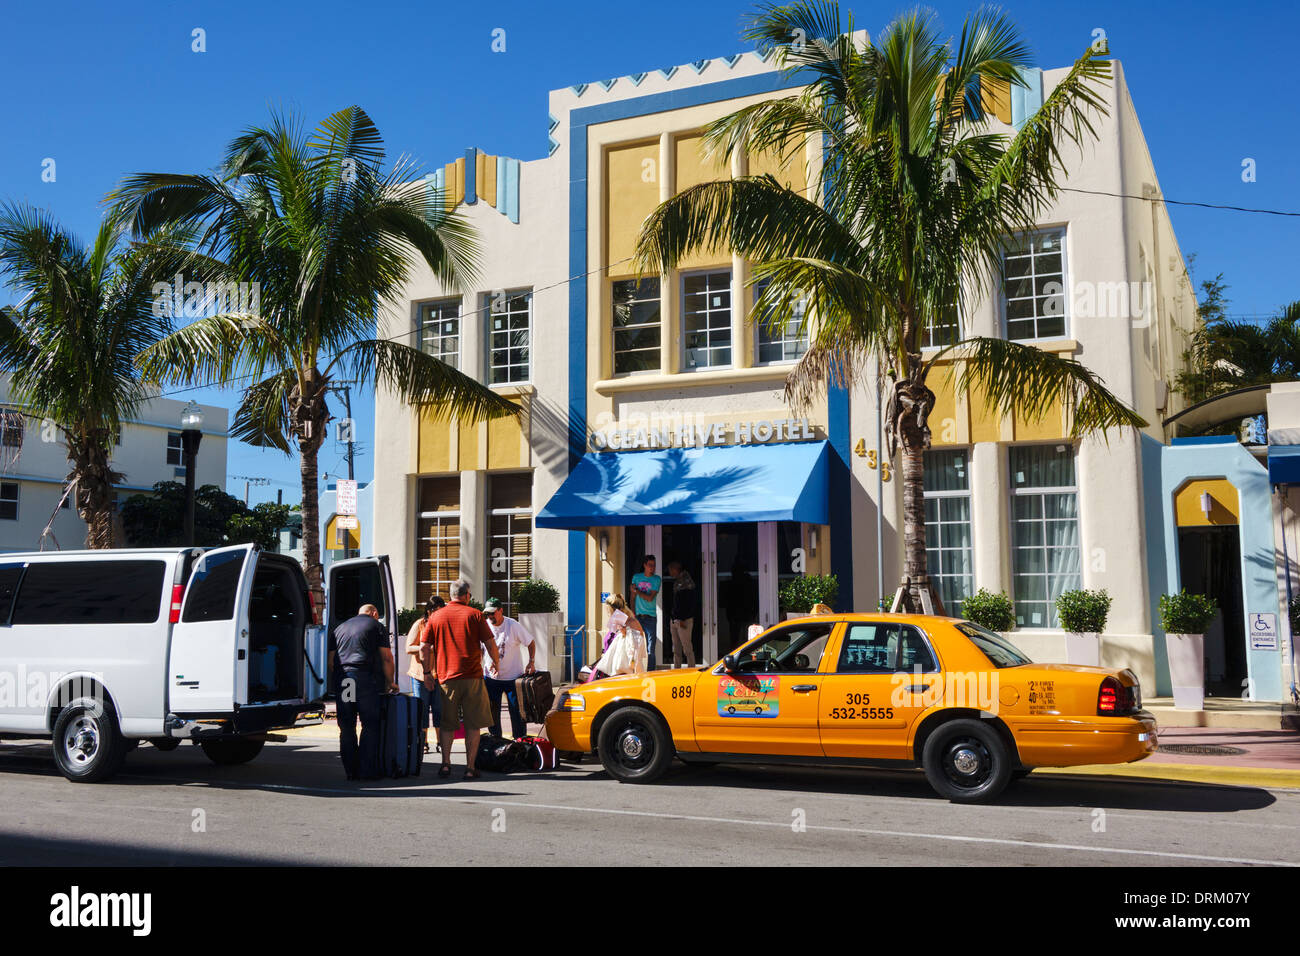 Miami Beach Florida,Ocean Drive,Ocean Five,hotel,hotel,hotels,taxi,cab,yellow,FL140122095 Stock Photo